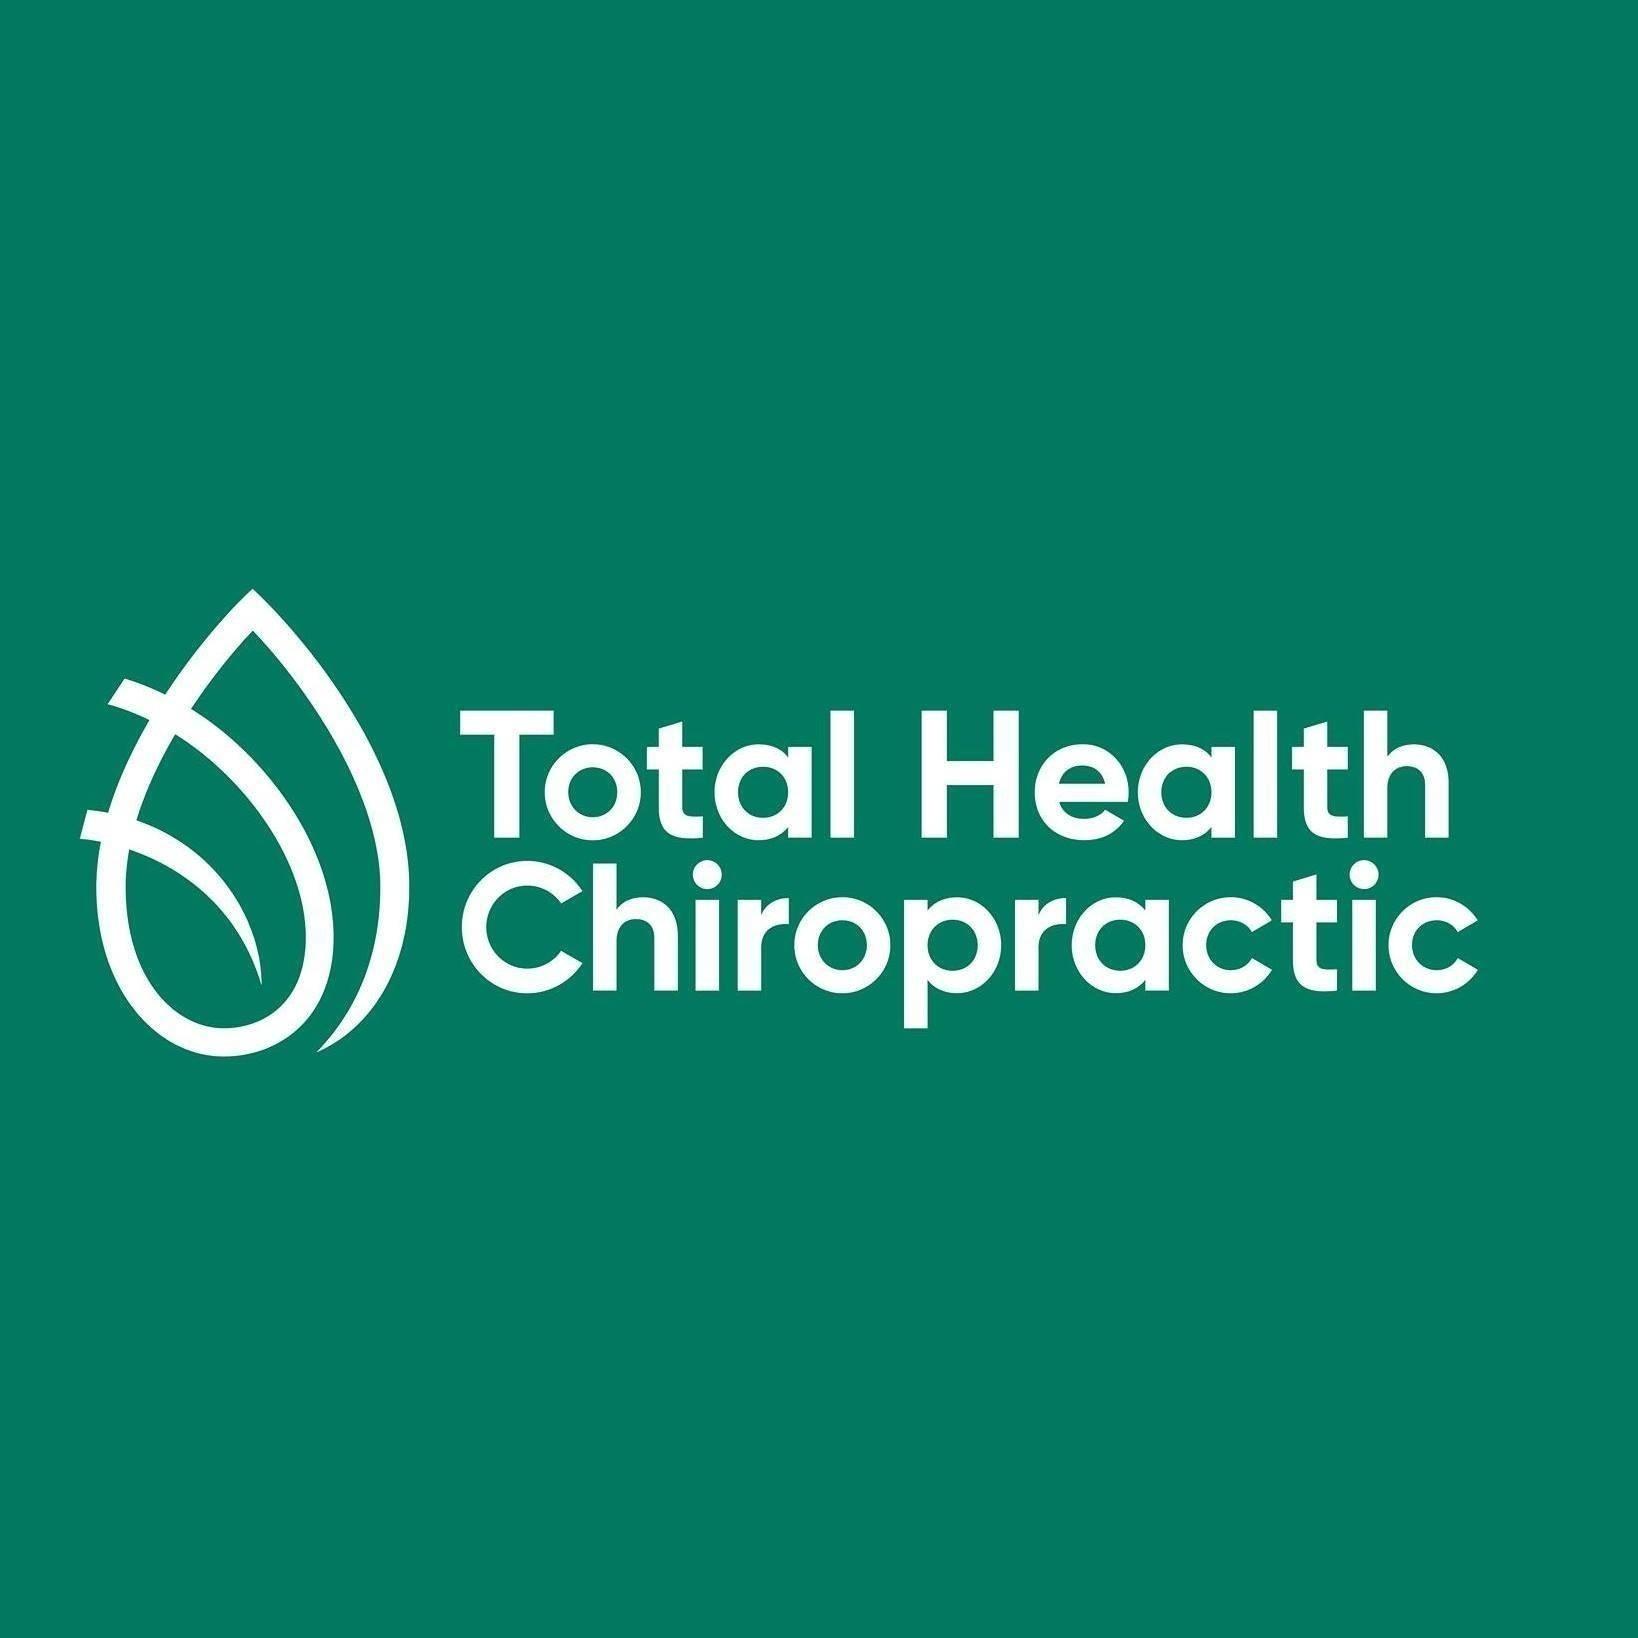 Total Health Chiropractic Beerwah - Beerwah, QLD 4519 - (07) 5200 4102 | ShowMeLocal.com